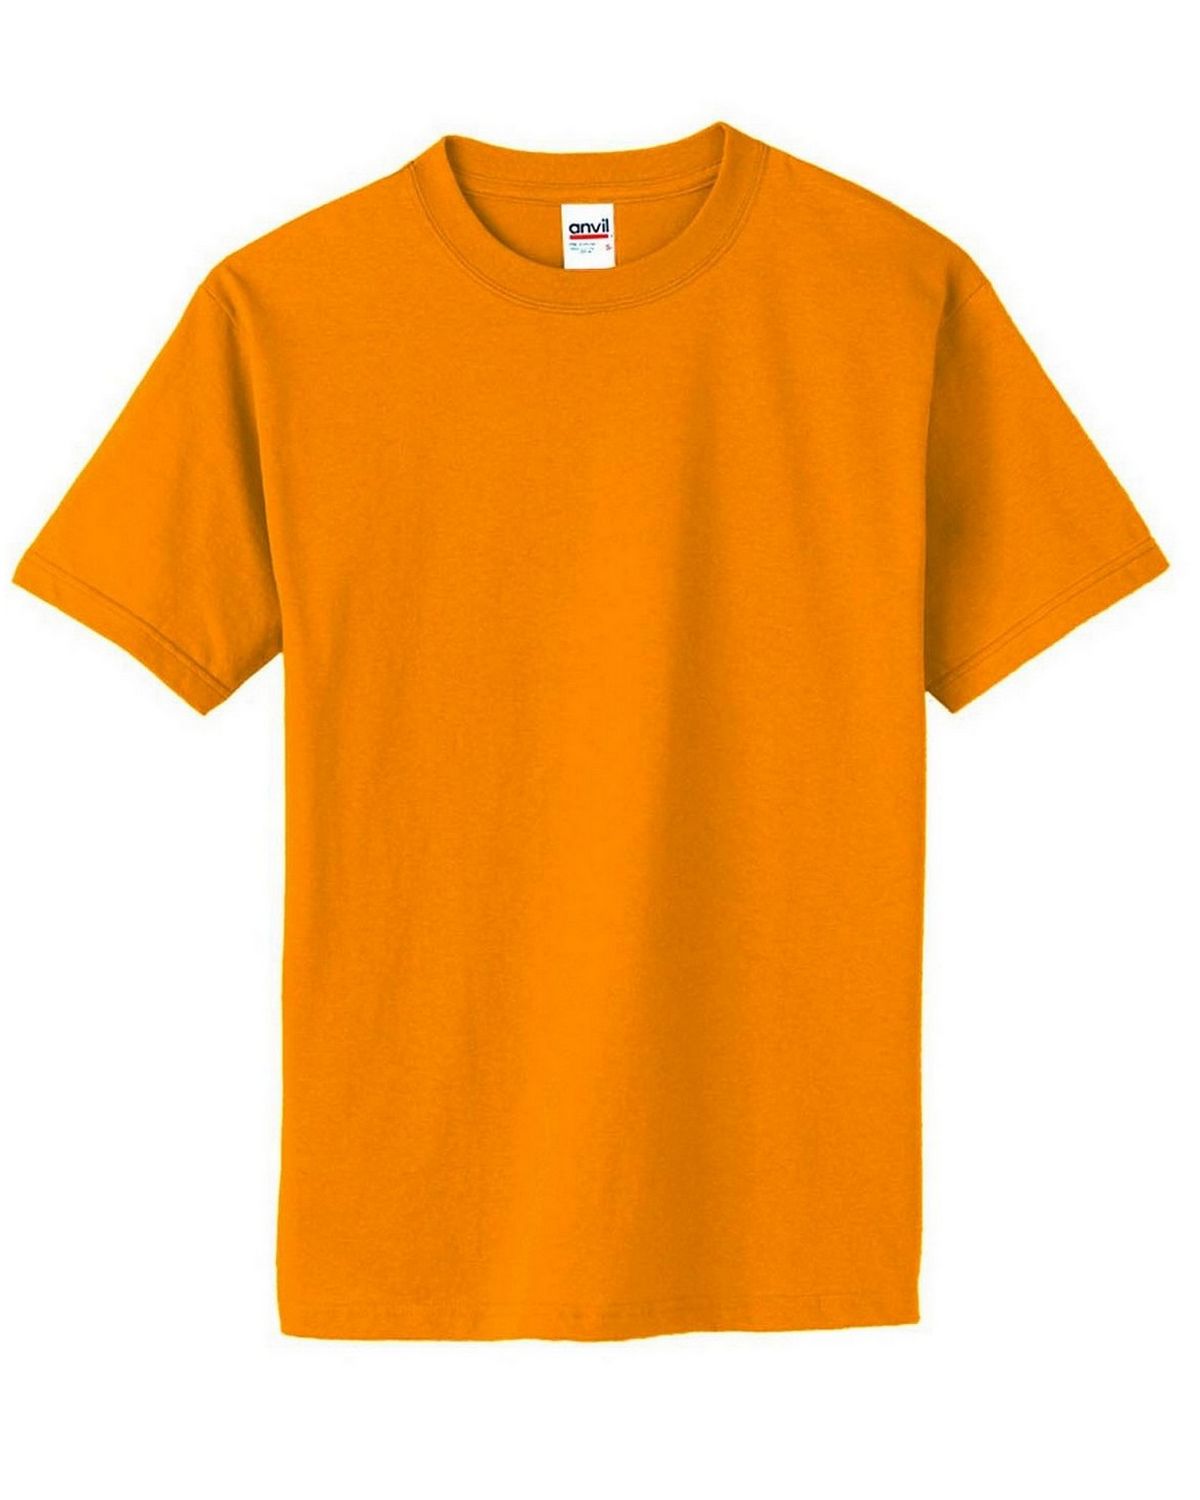 Anvil OR420 Men's 100% Organic Cotton T-Shirt